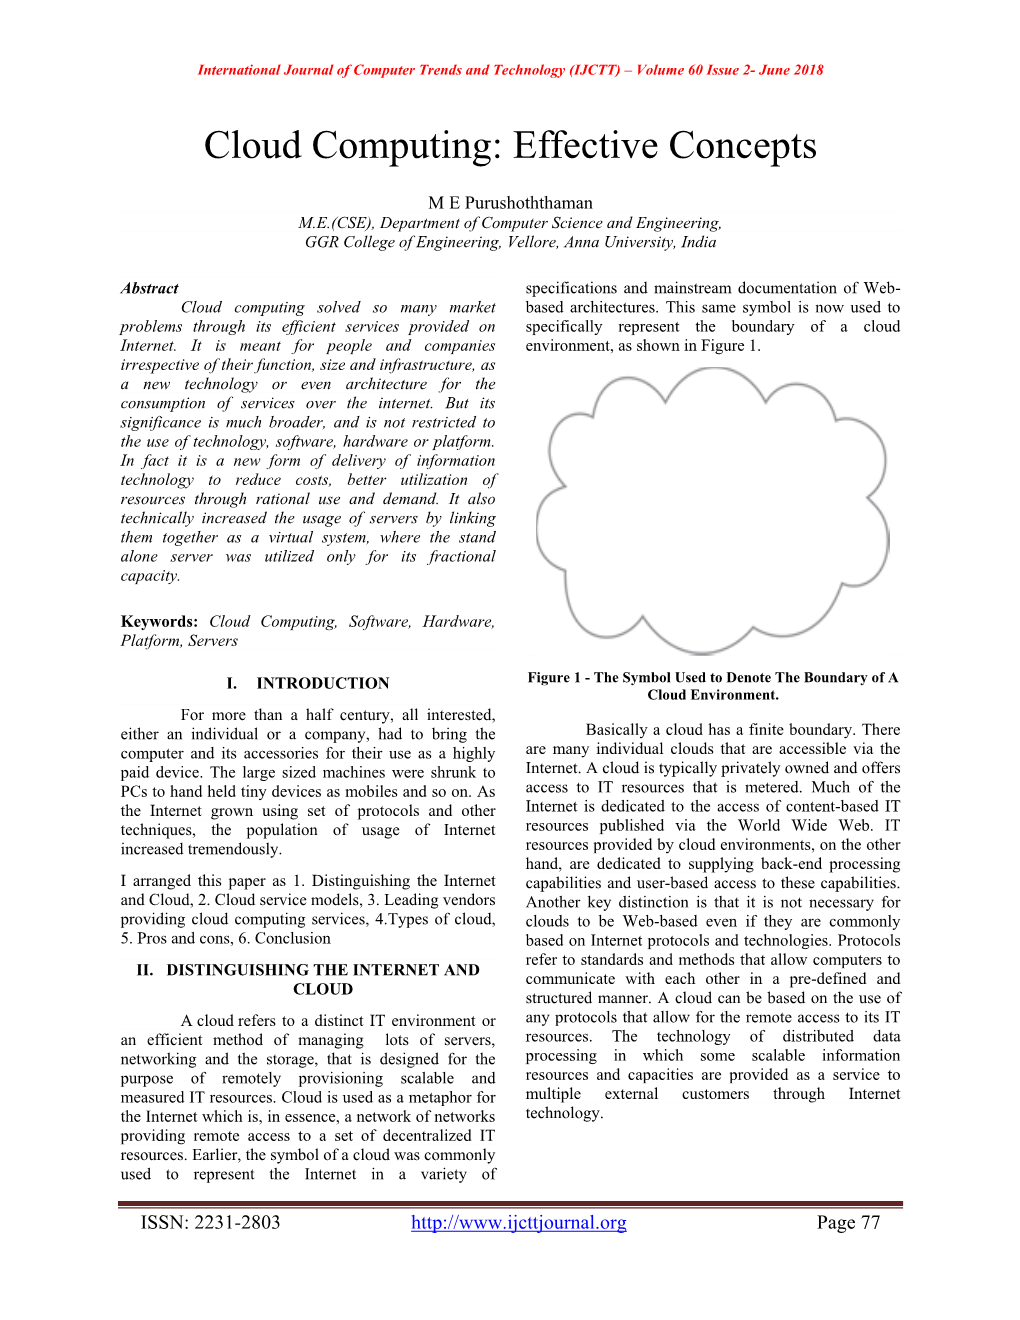 Cloud Computing: Effective Concepts